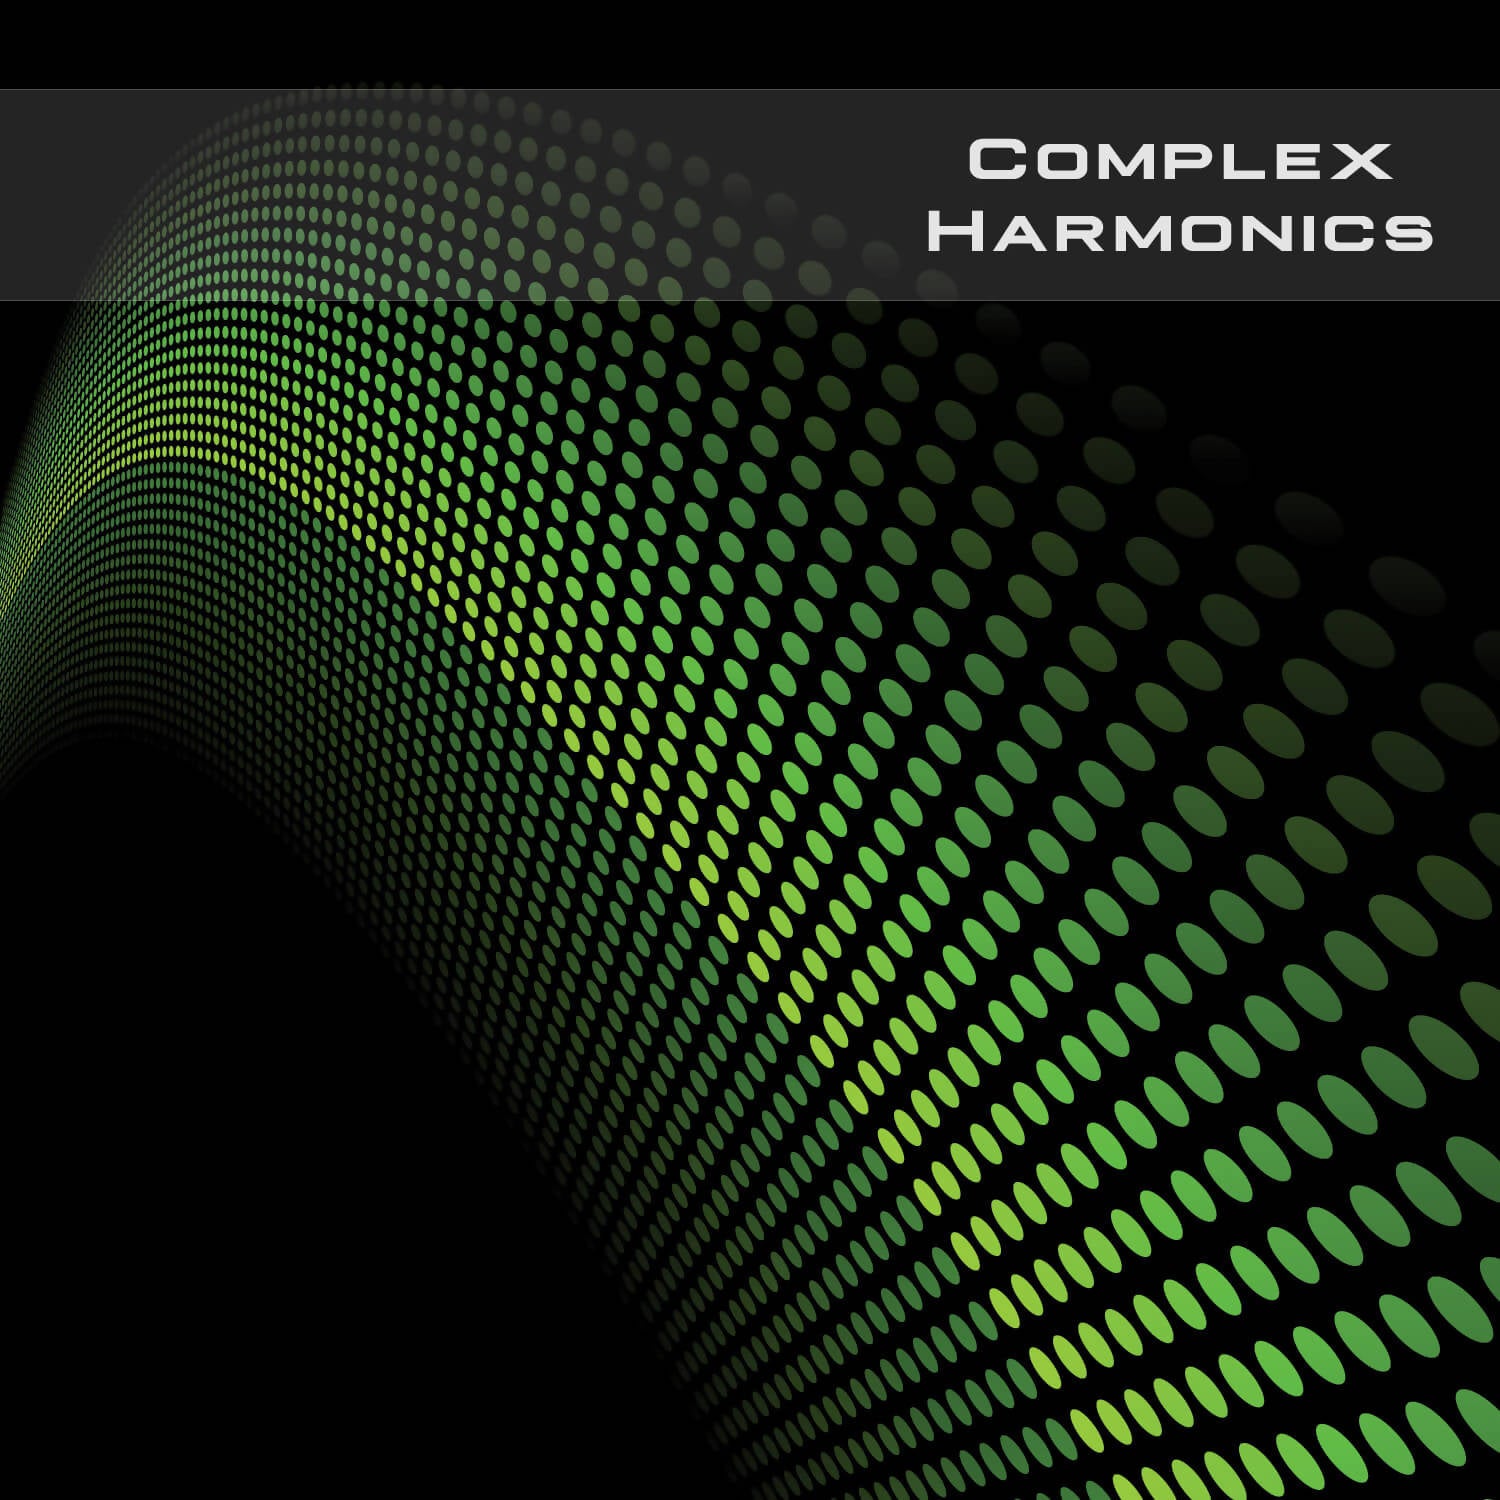 Complex Harmonics volume 1 - a preset pack providing 64 presets for Sonivox's TimeWarp 2600 synthesizer.